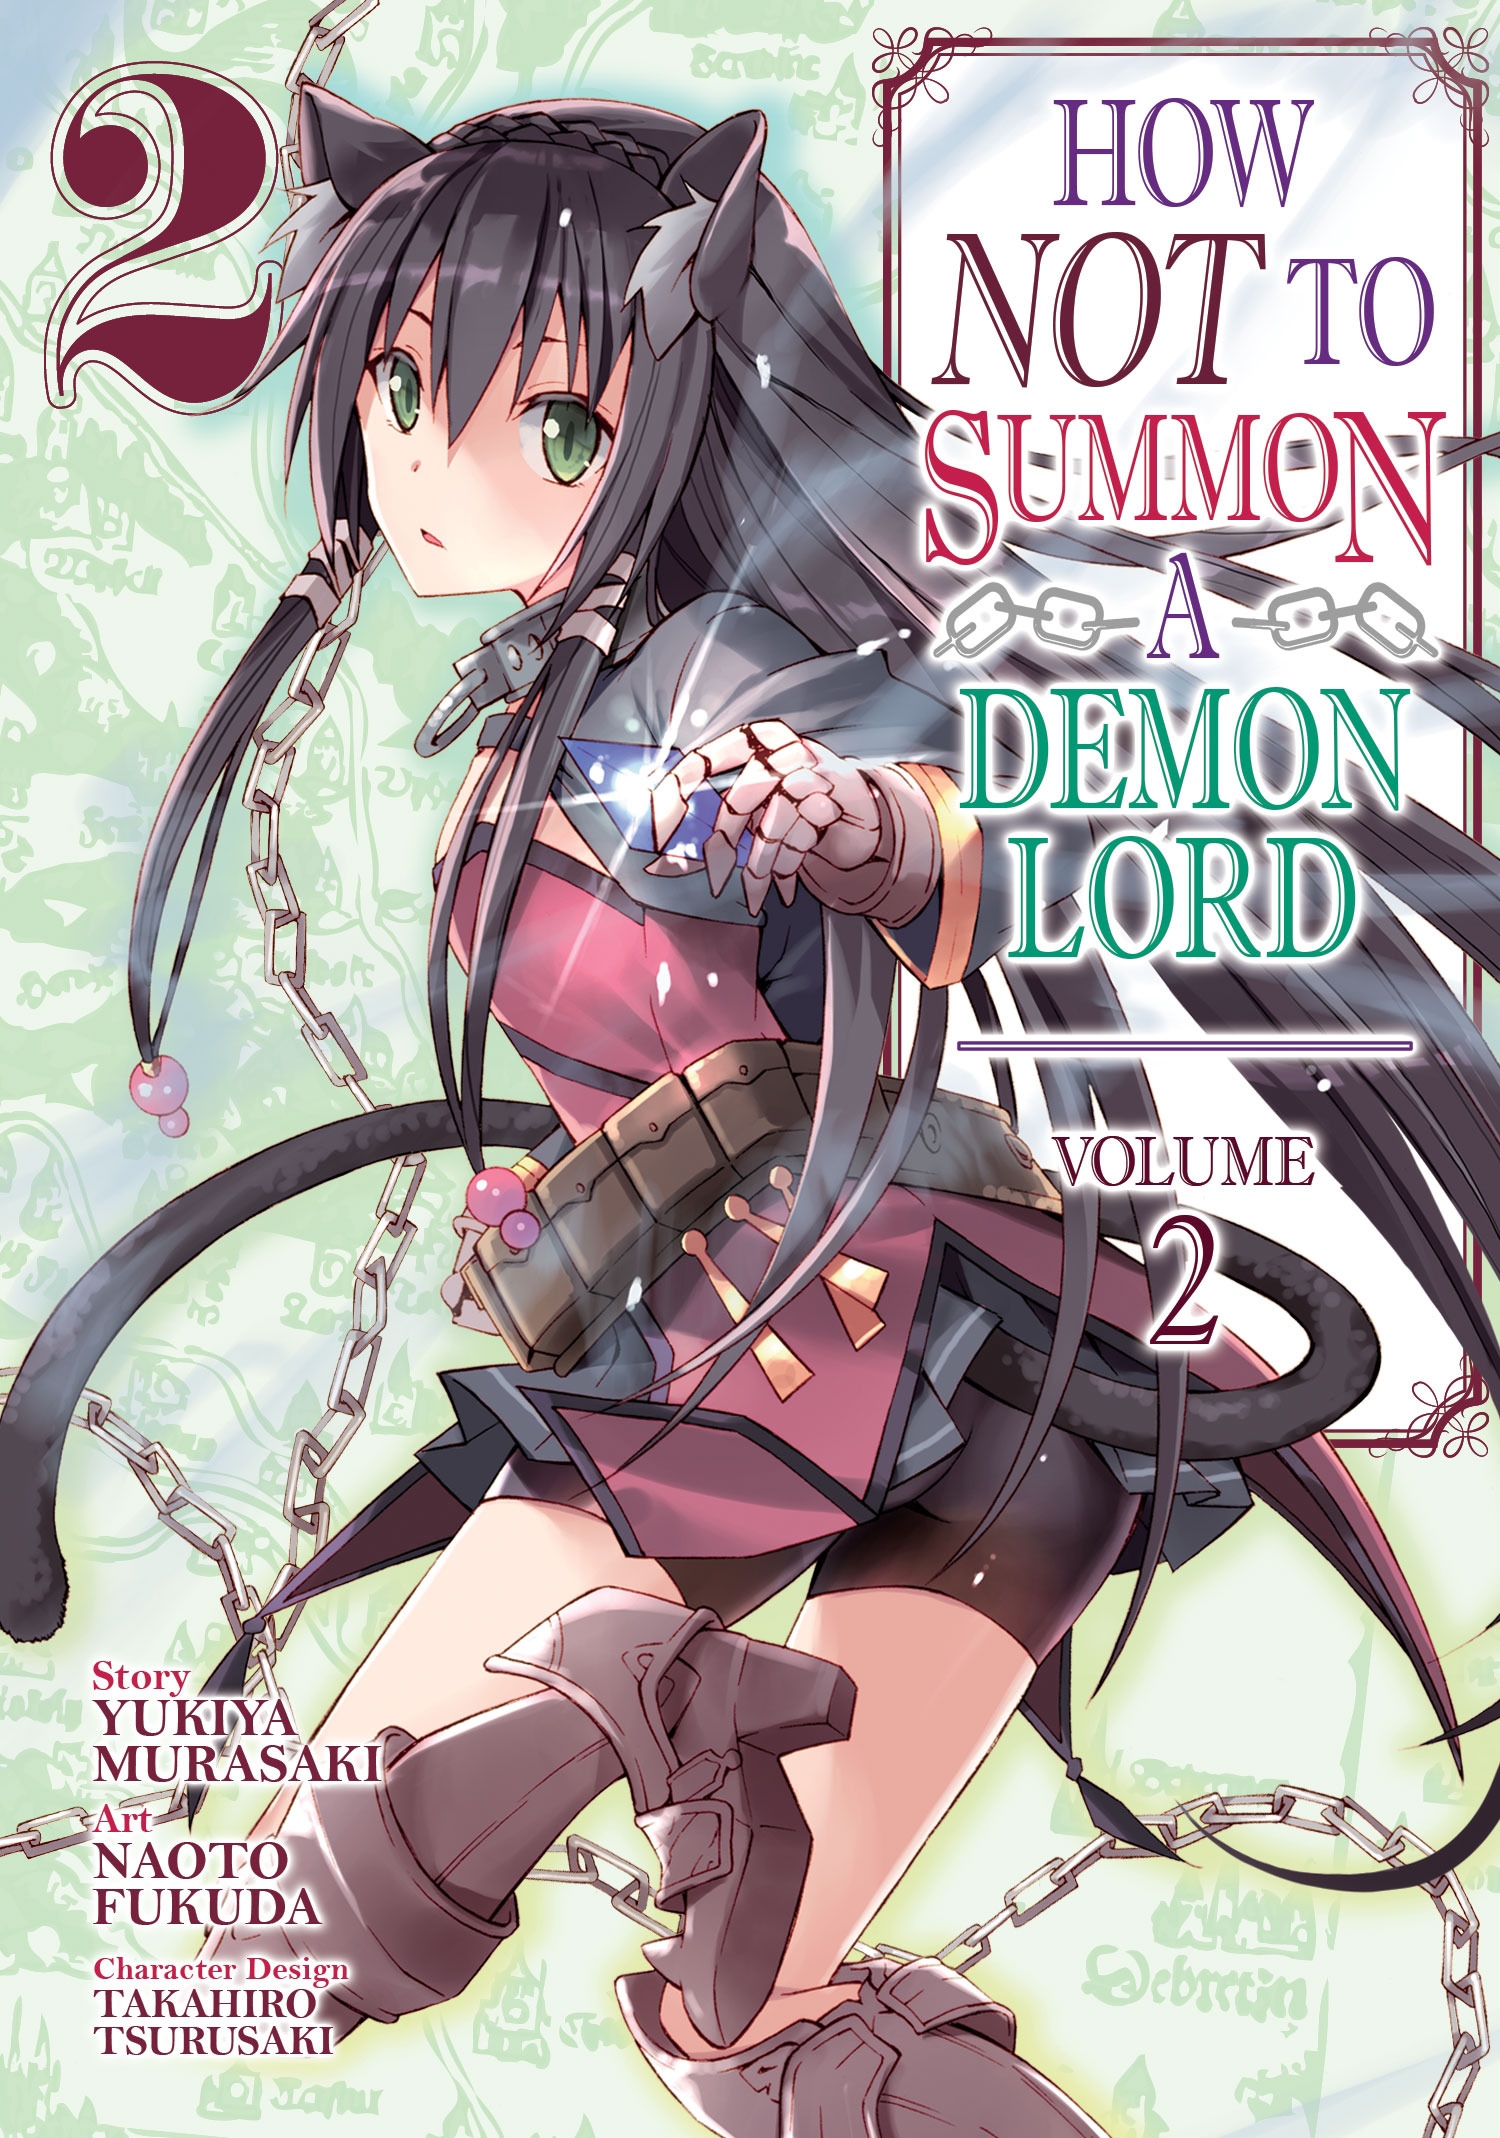 how-not-to-summon-a-demon-lord-manga-vol-2-by-yukiya-murasaki